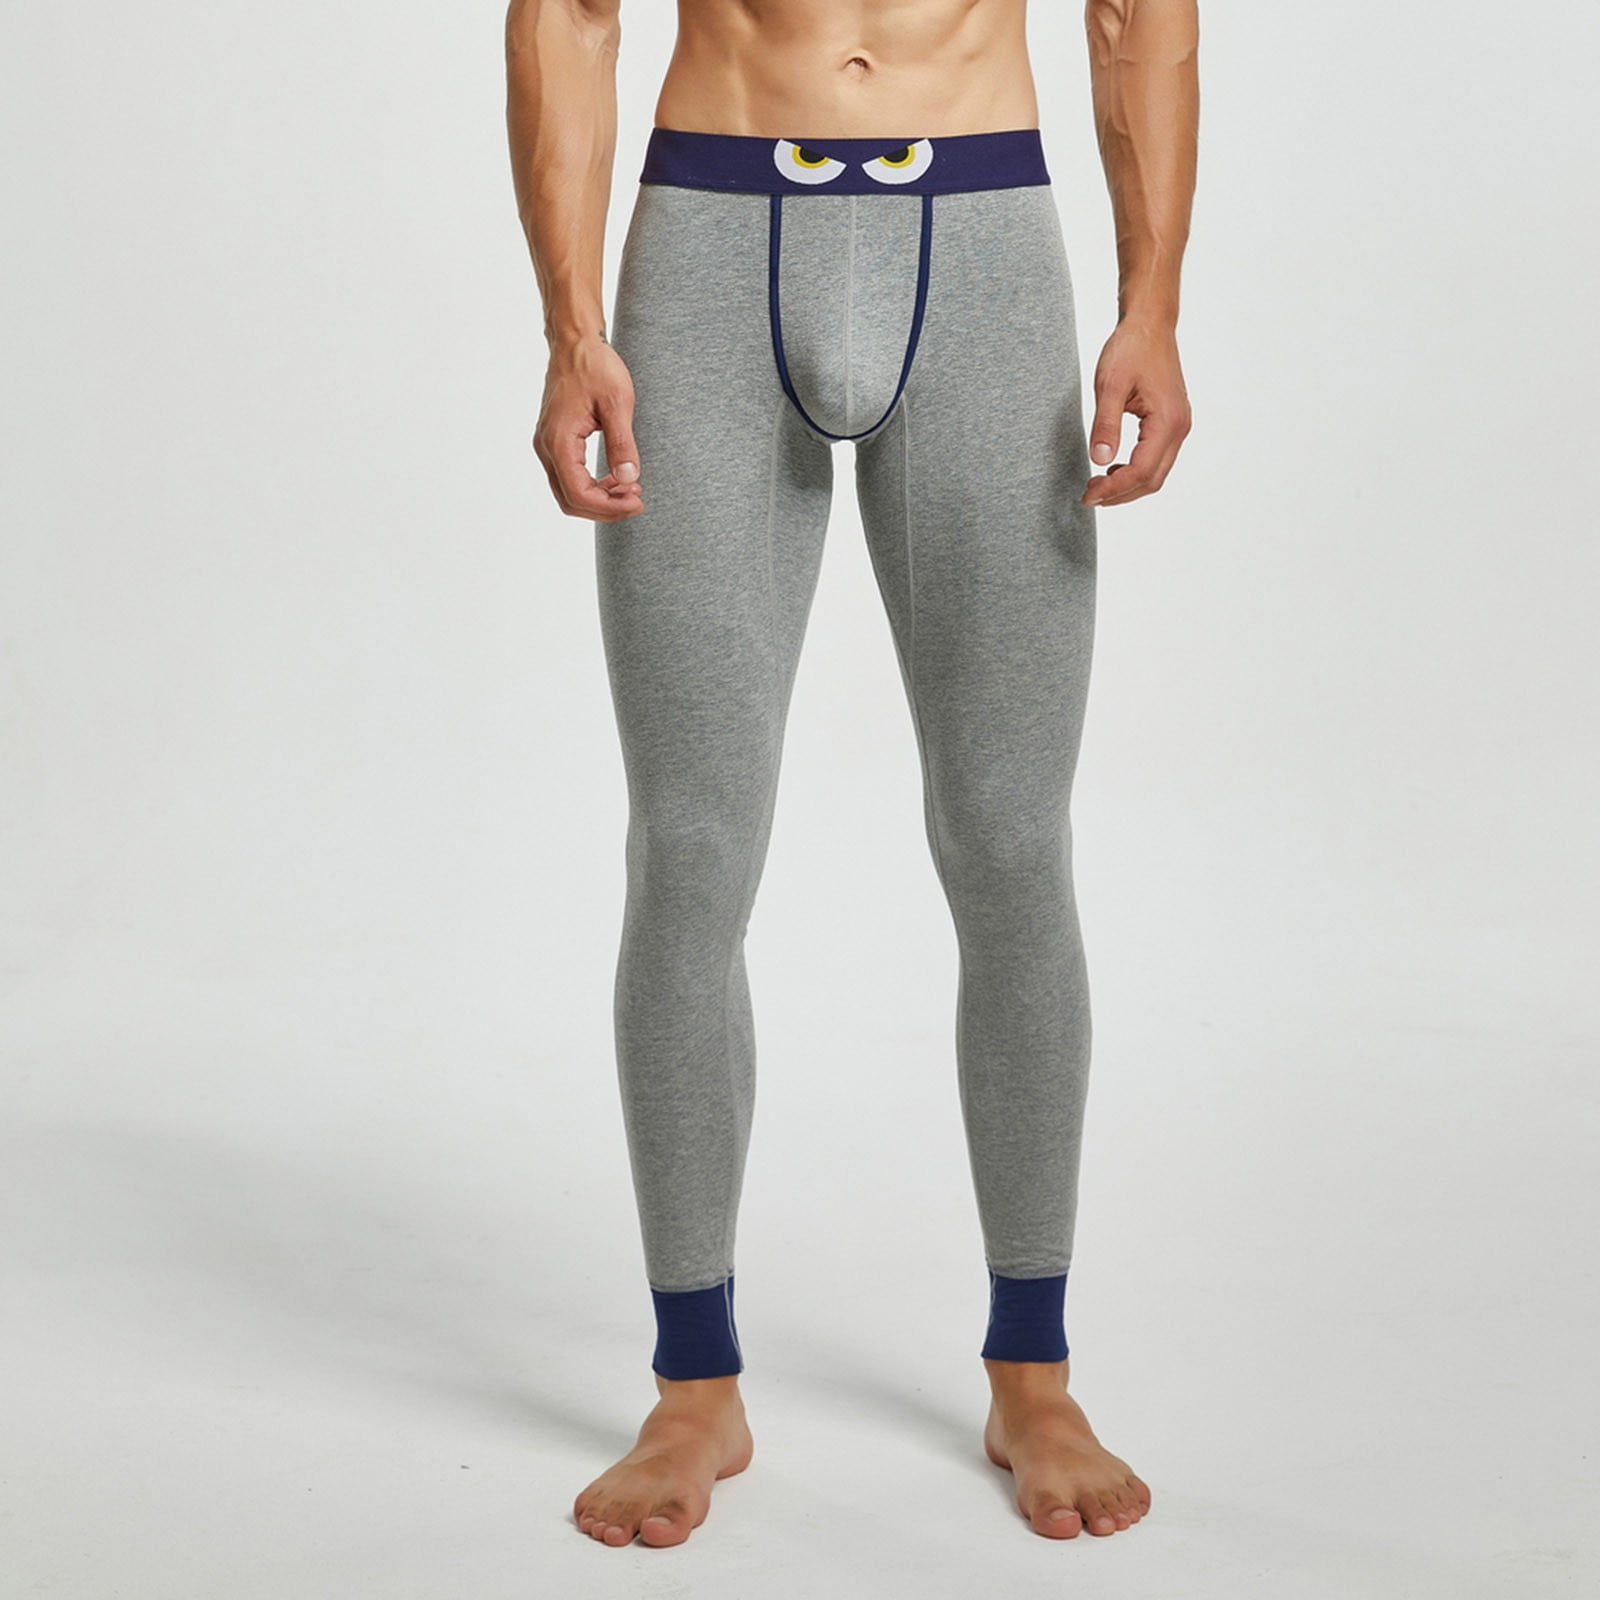 jsaierl Men's Thermal Underwear Bottom Warm Lightweight Long Johns ...